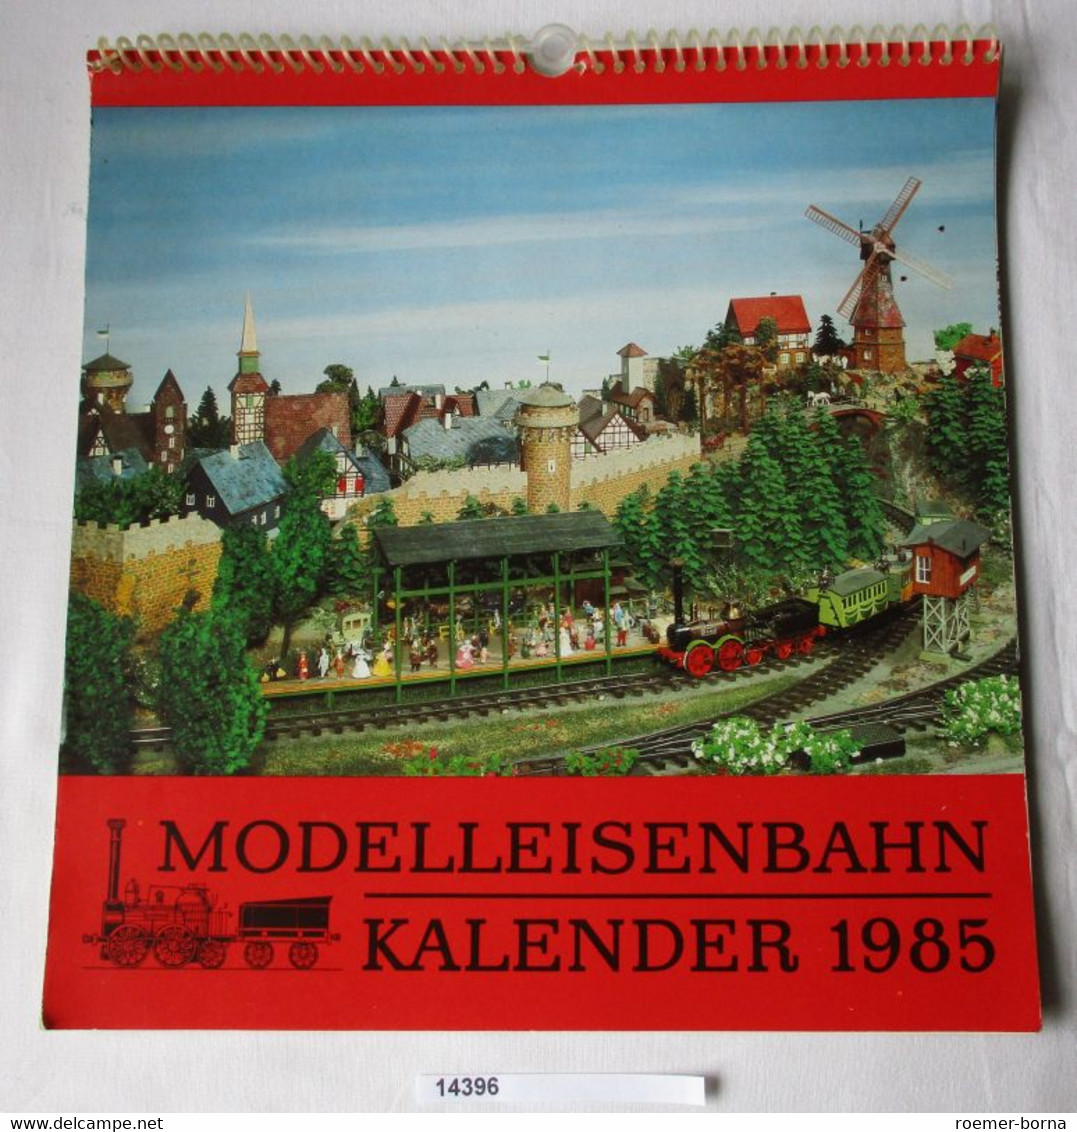 Modelleisenbahnkalender 1985 - Kalender